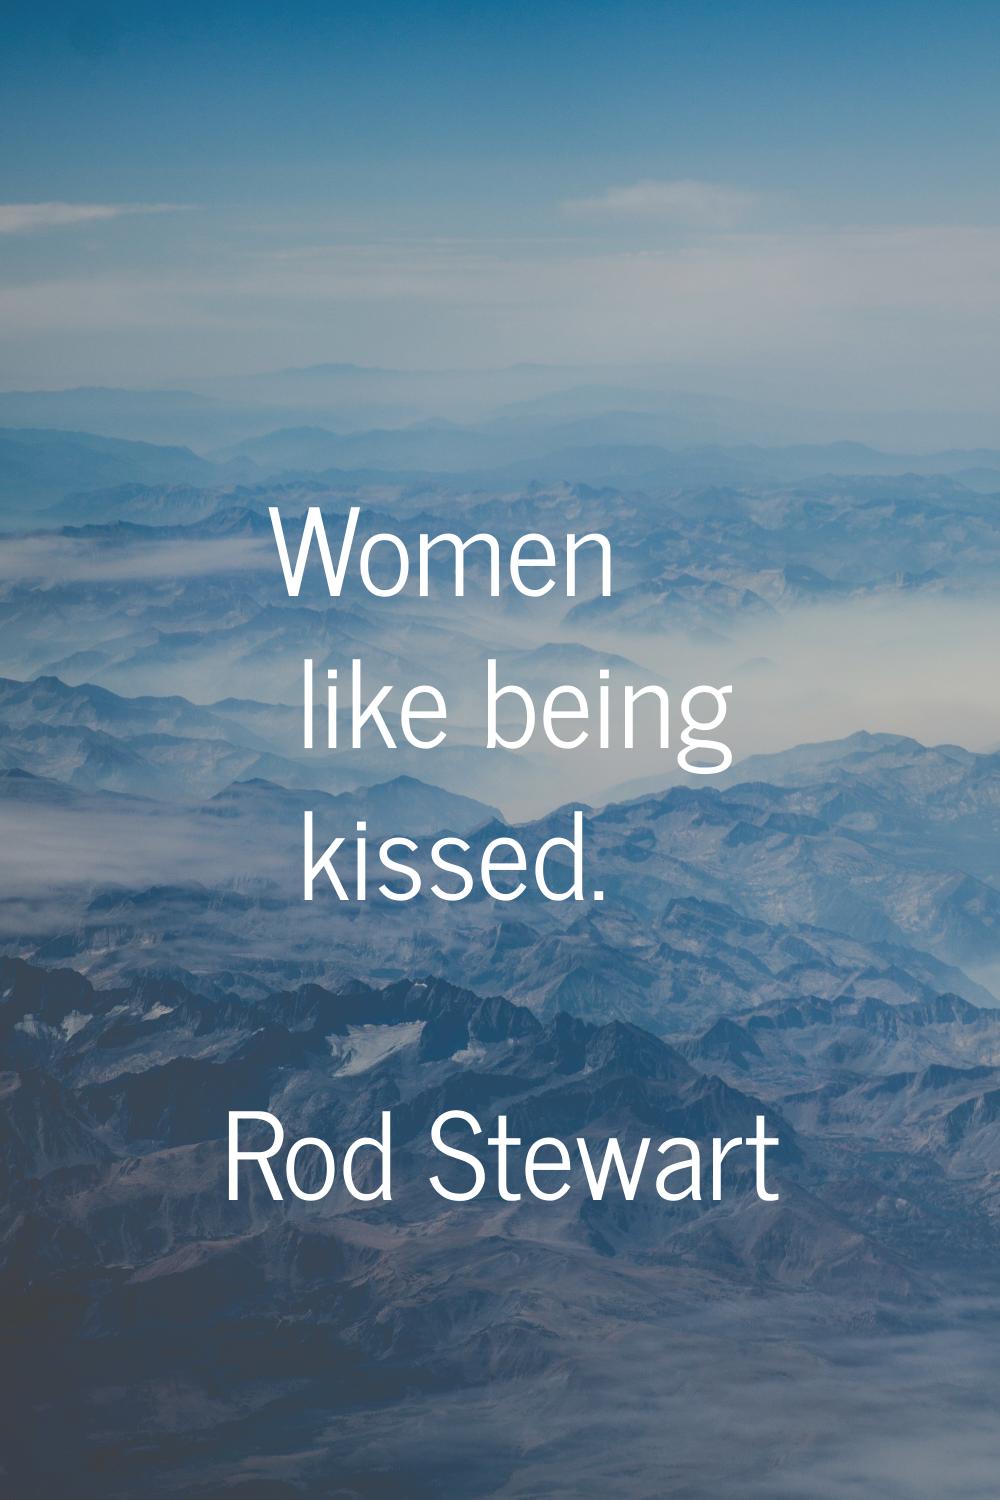 Women like being kissed.